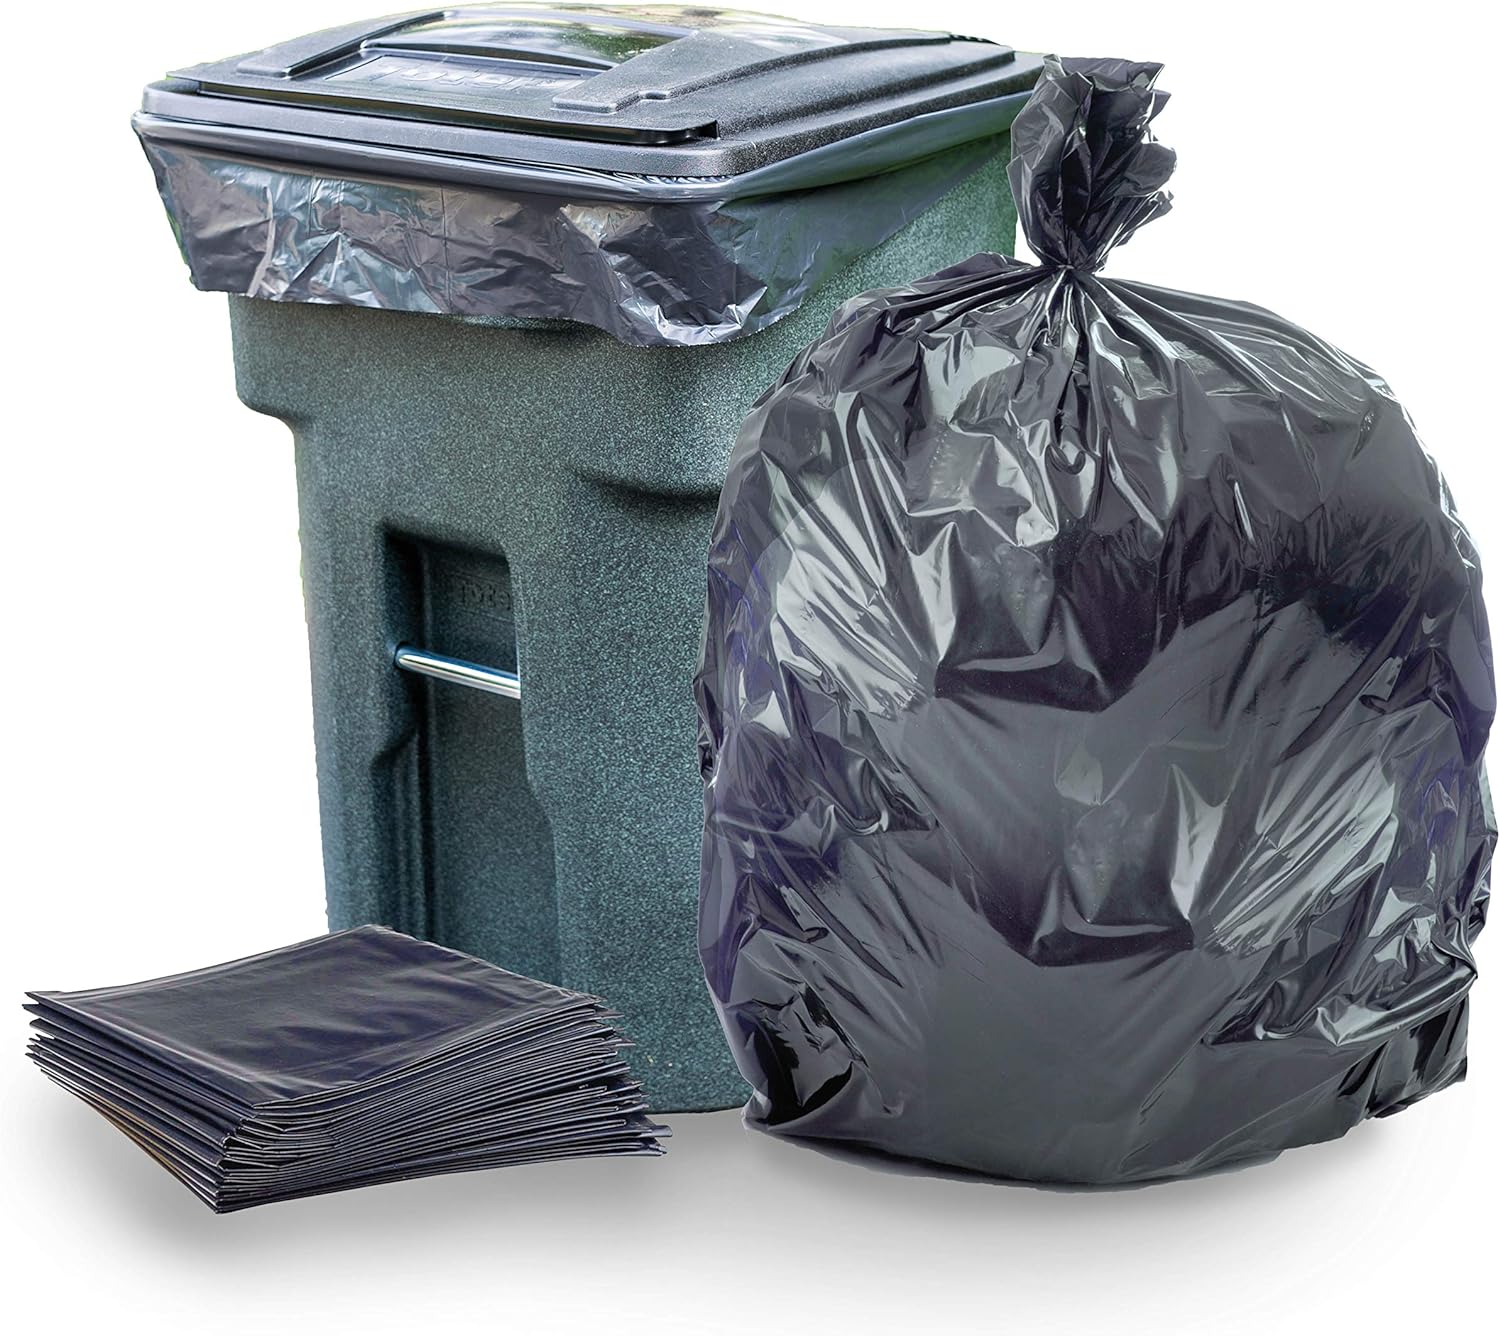 Extra-Large Trash Bags: Enhancing Portable Restroom Rental Cleanup Efficiency